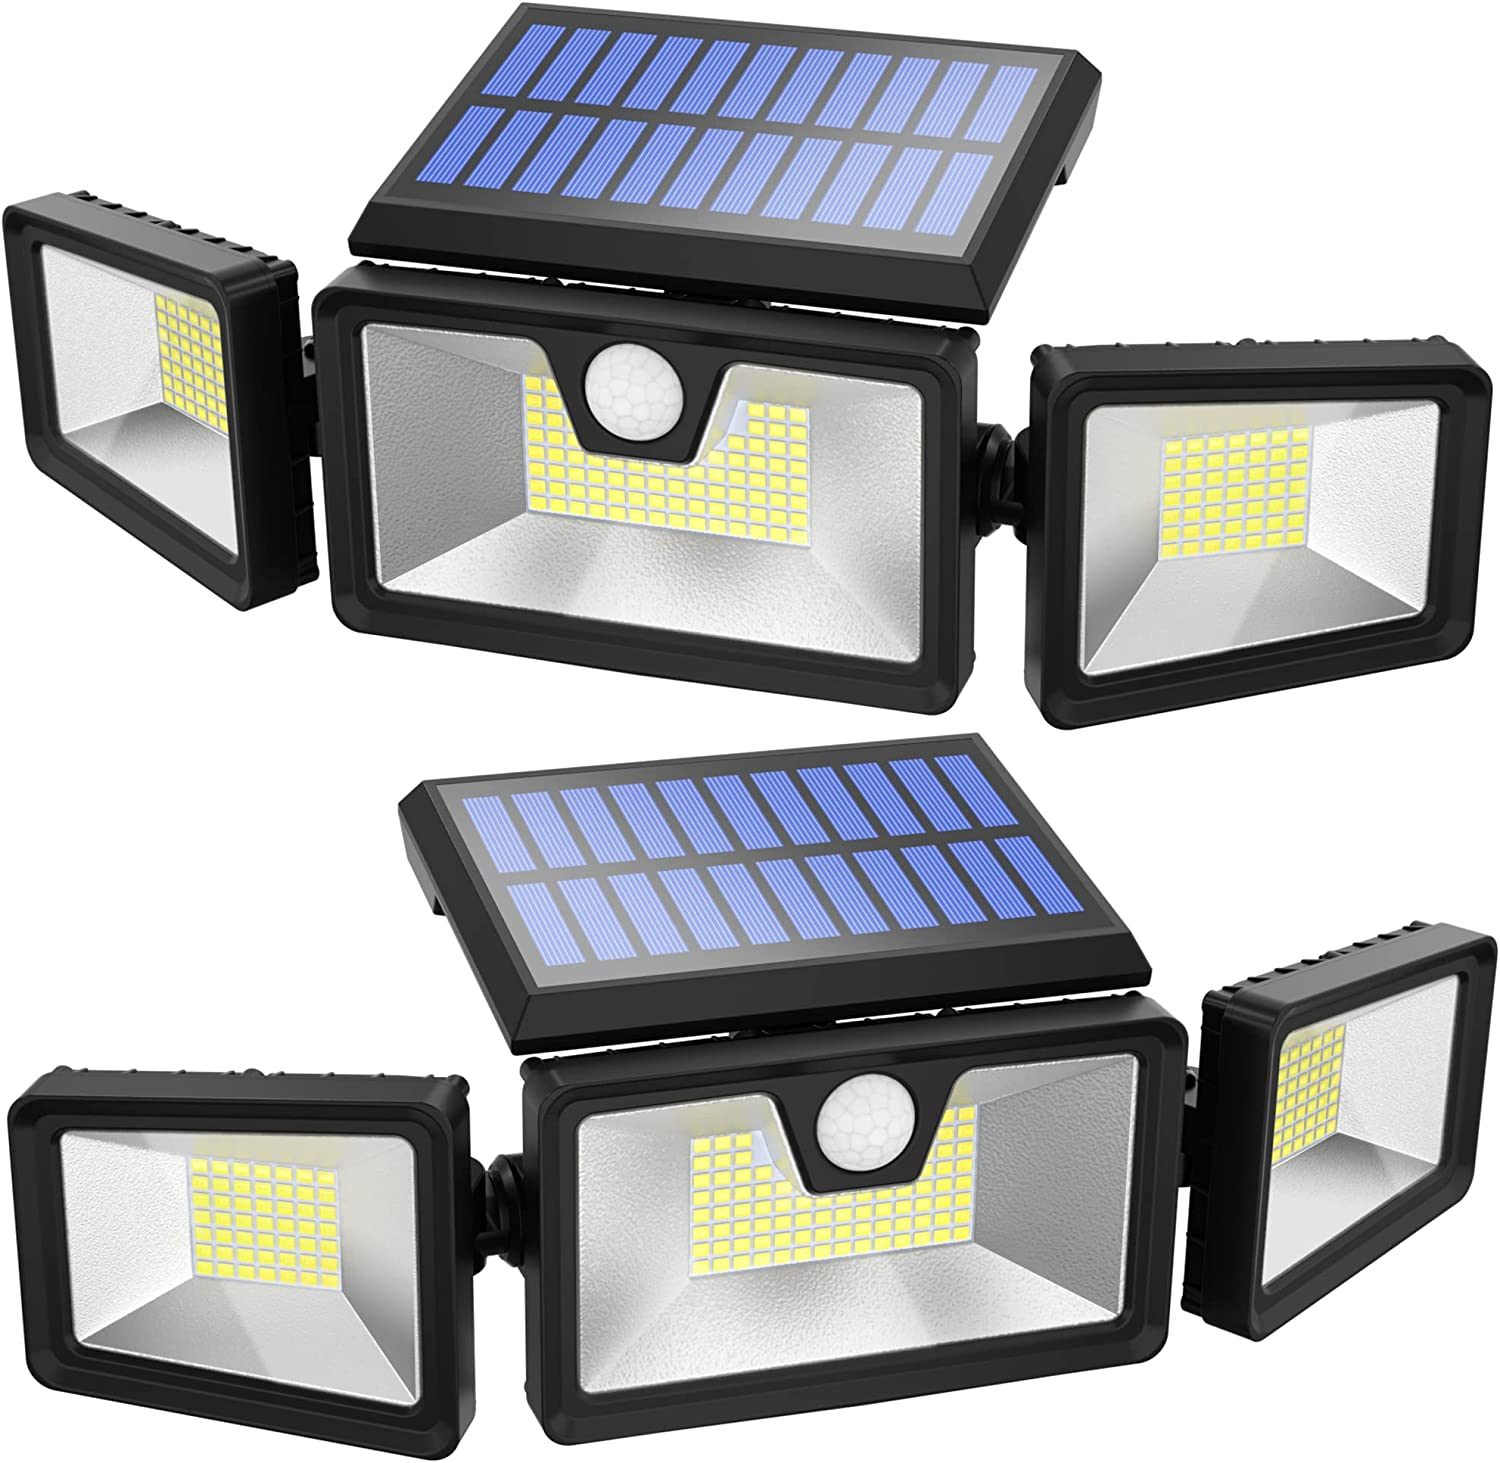 Otdair 188 LED Solar Lights Outdoor, 2500LM 3 Modes Solar Motion Lights Outdoor, IP65 Waterproof Security Lights, Adjustable Bright Flood Lights $26.99